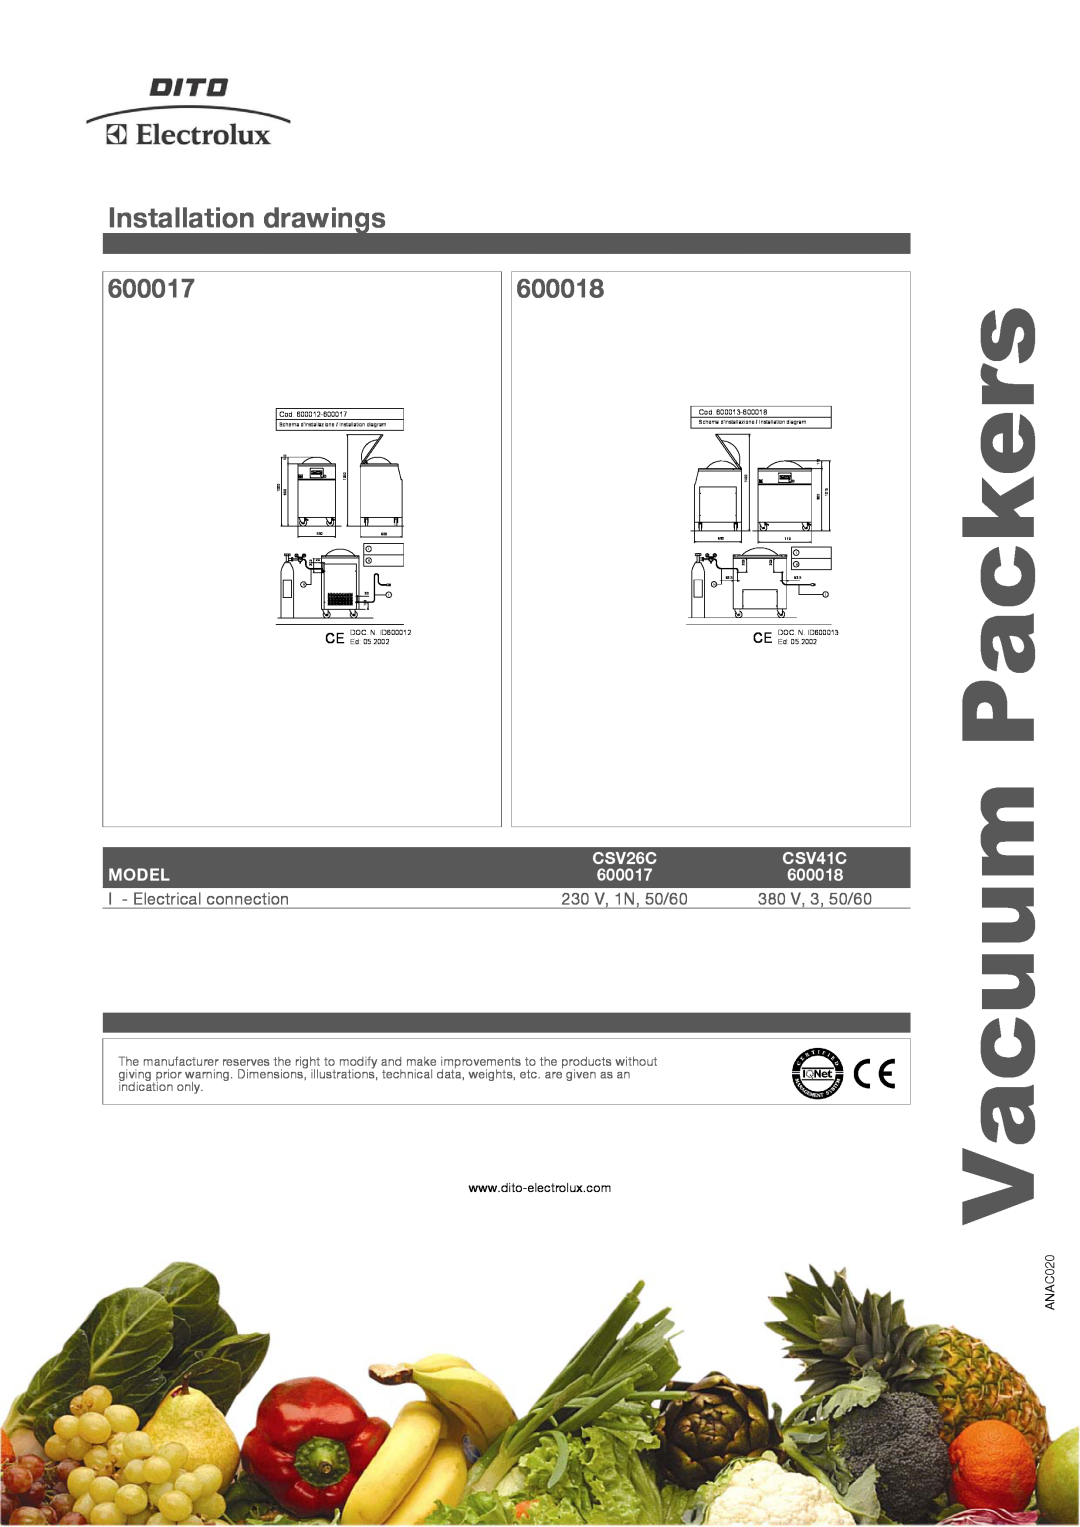 Electrolux 600017 manual Installation drawings, 600018, Packers, Vacuum, CSV26C, CSV41C, Model 